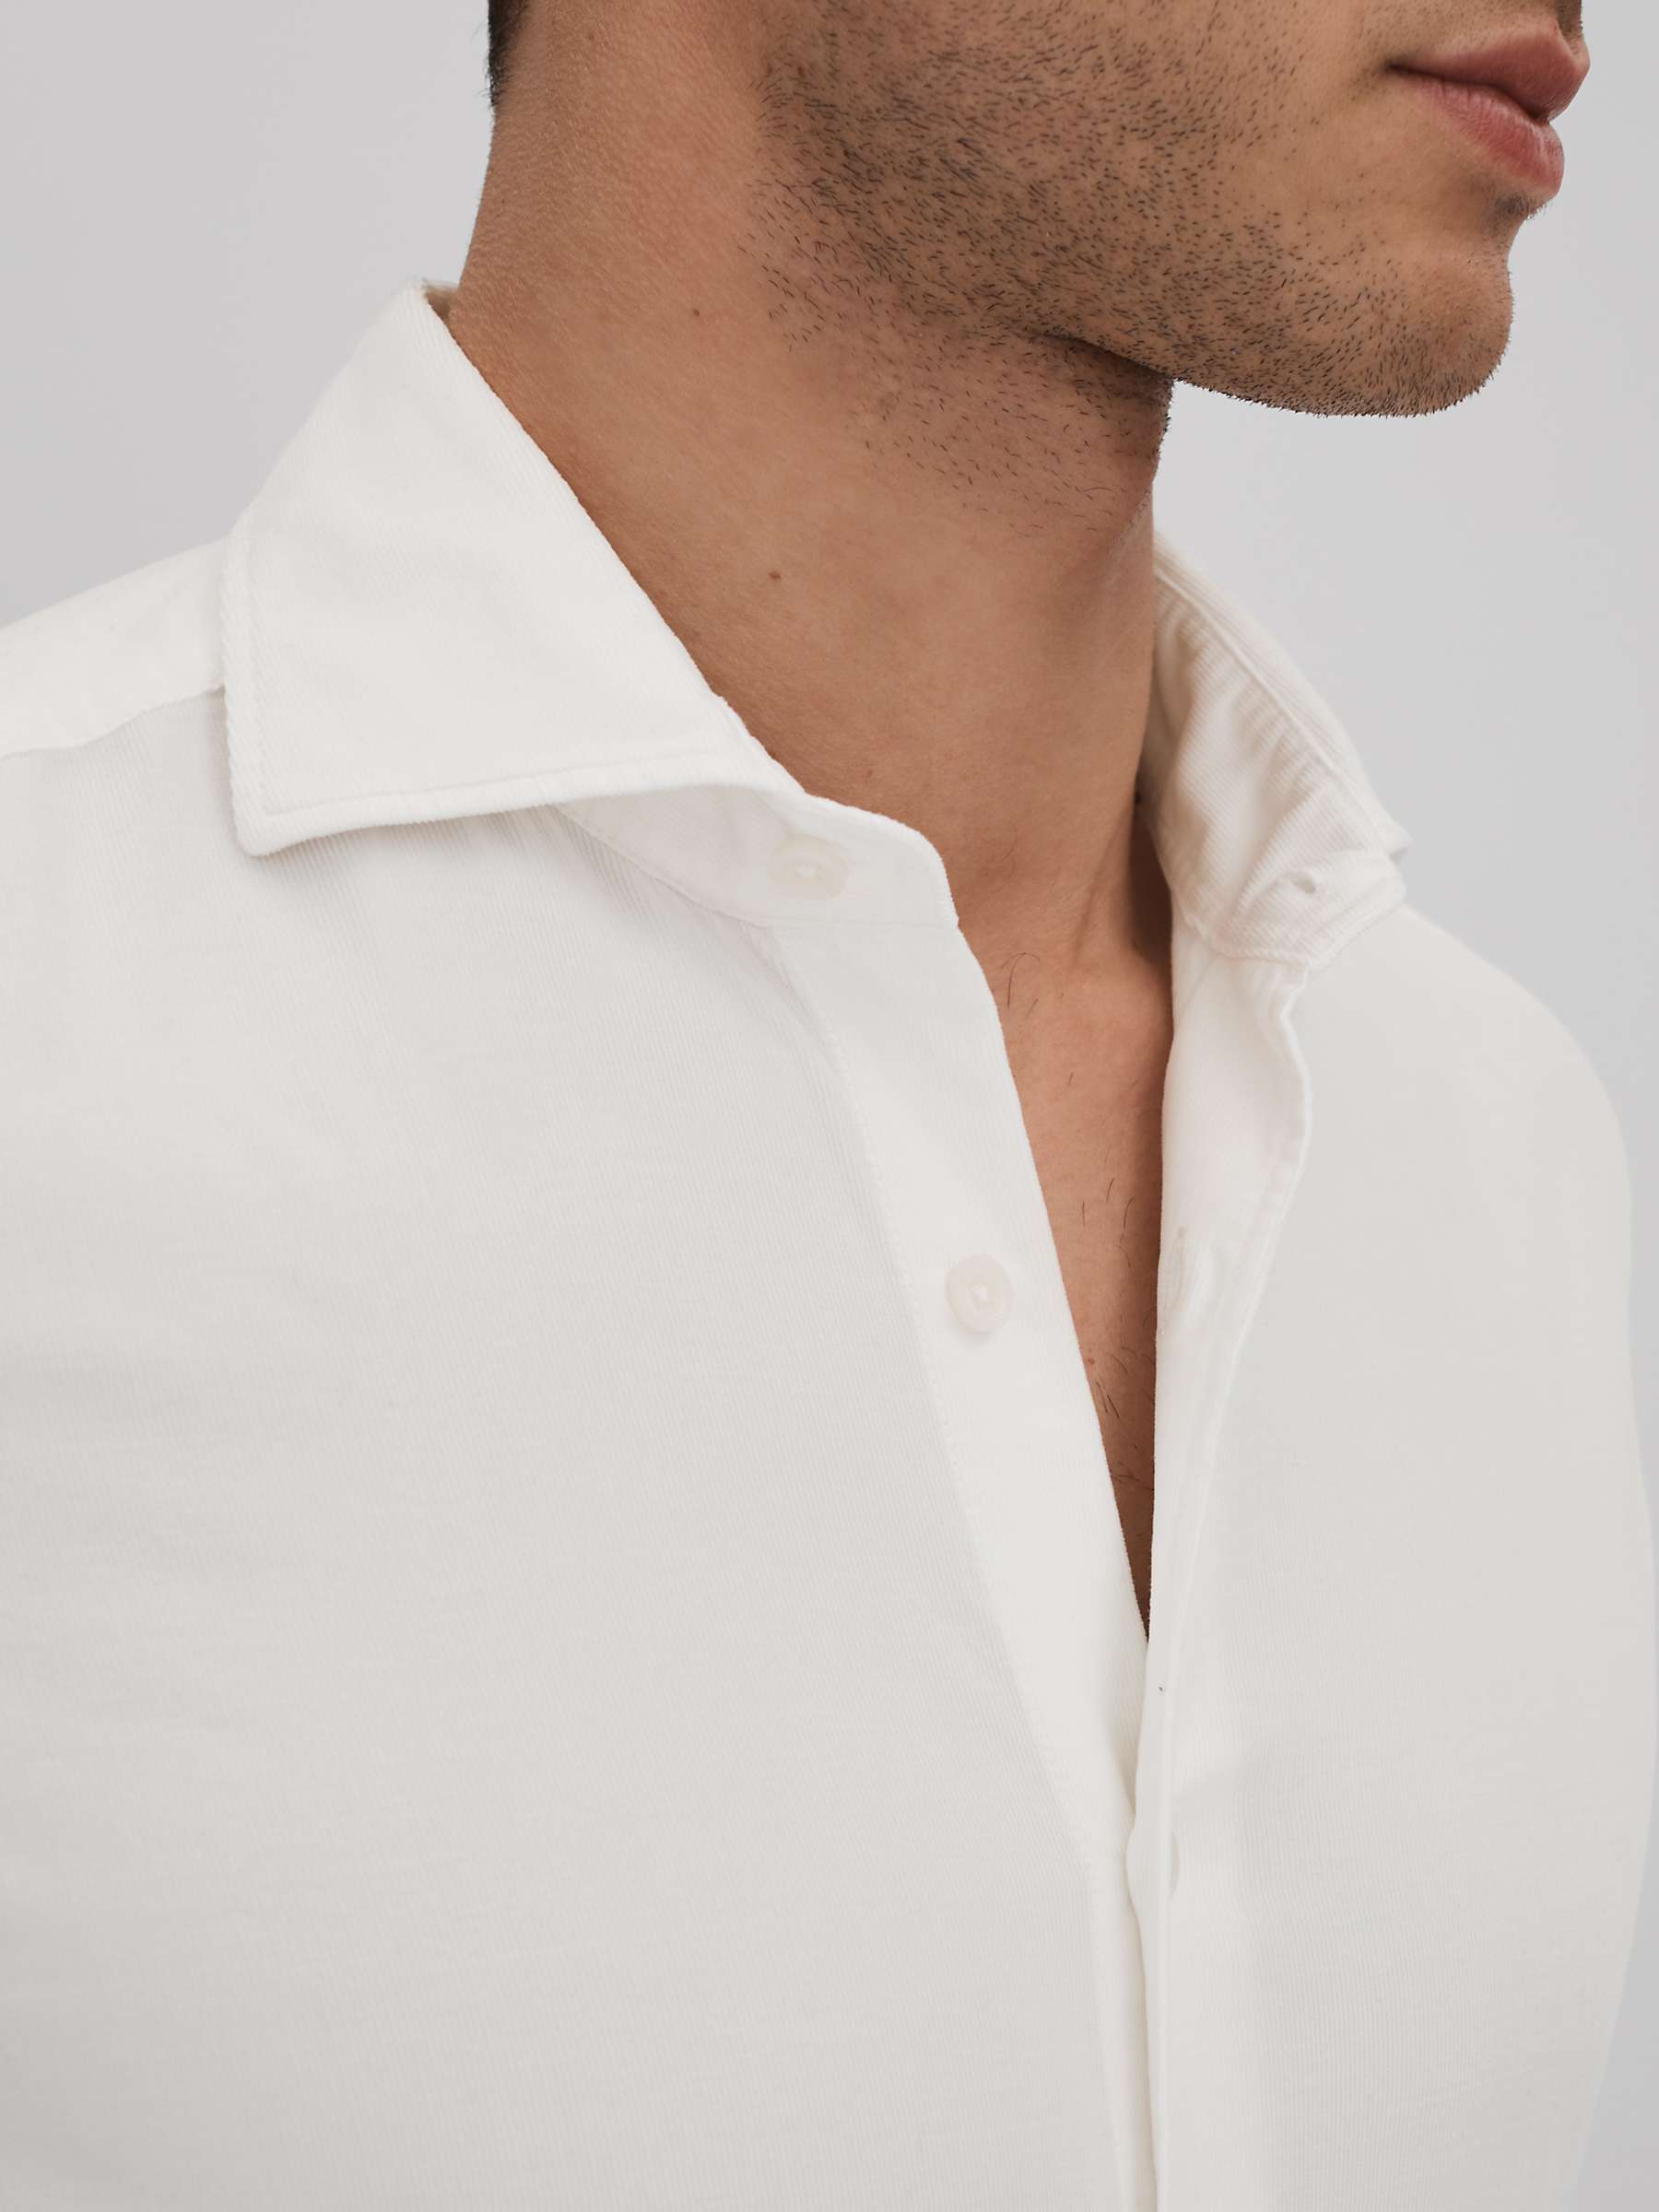 Buy Reiss Vincy Long Sleeve Cutaway Collar Shirt Online at johnlewis.com